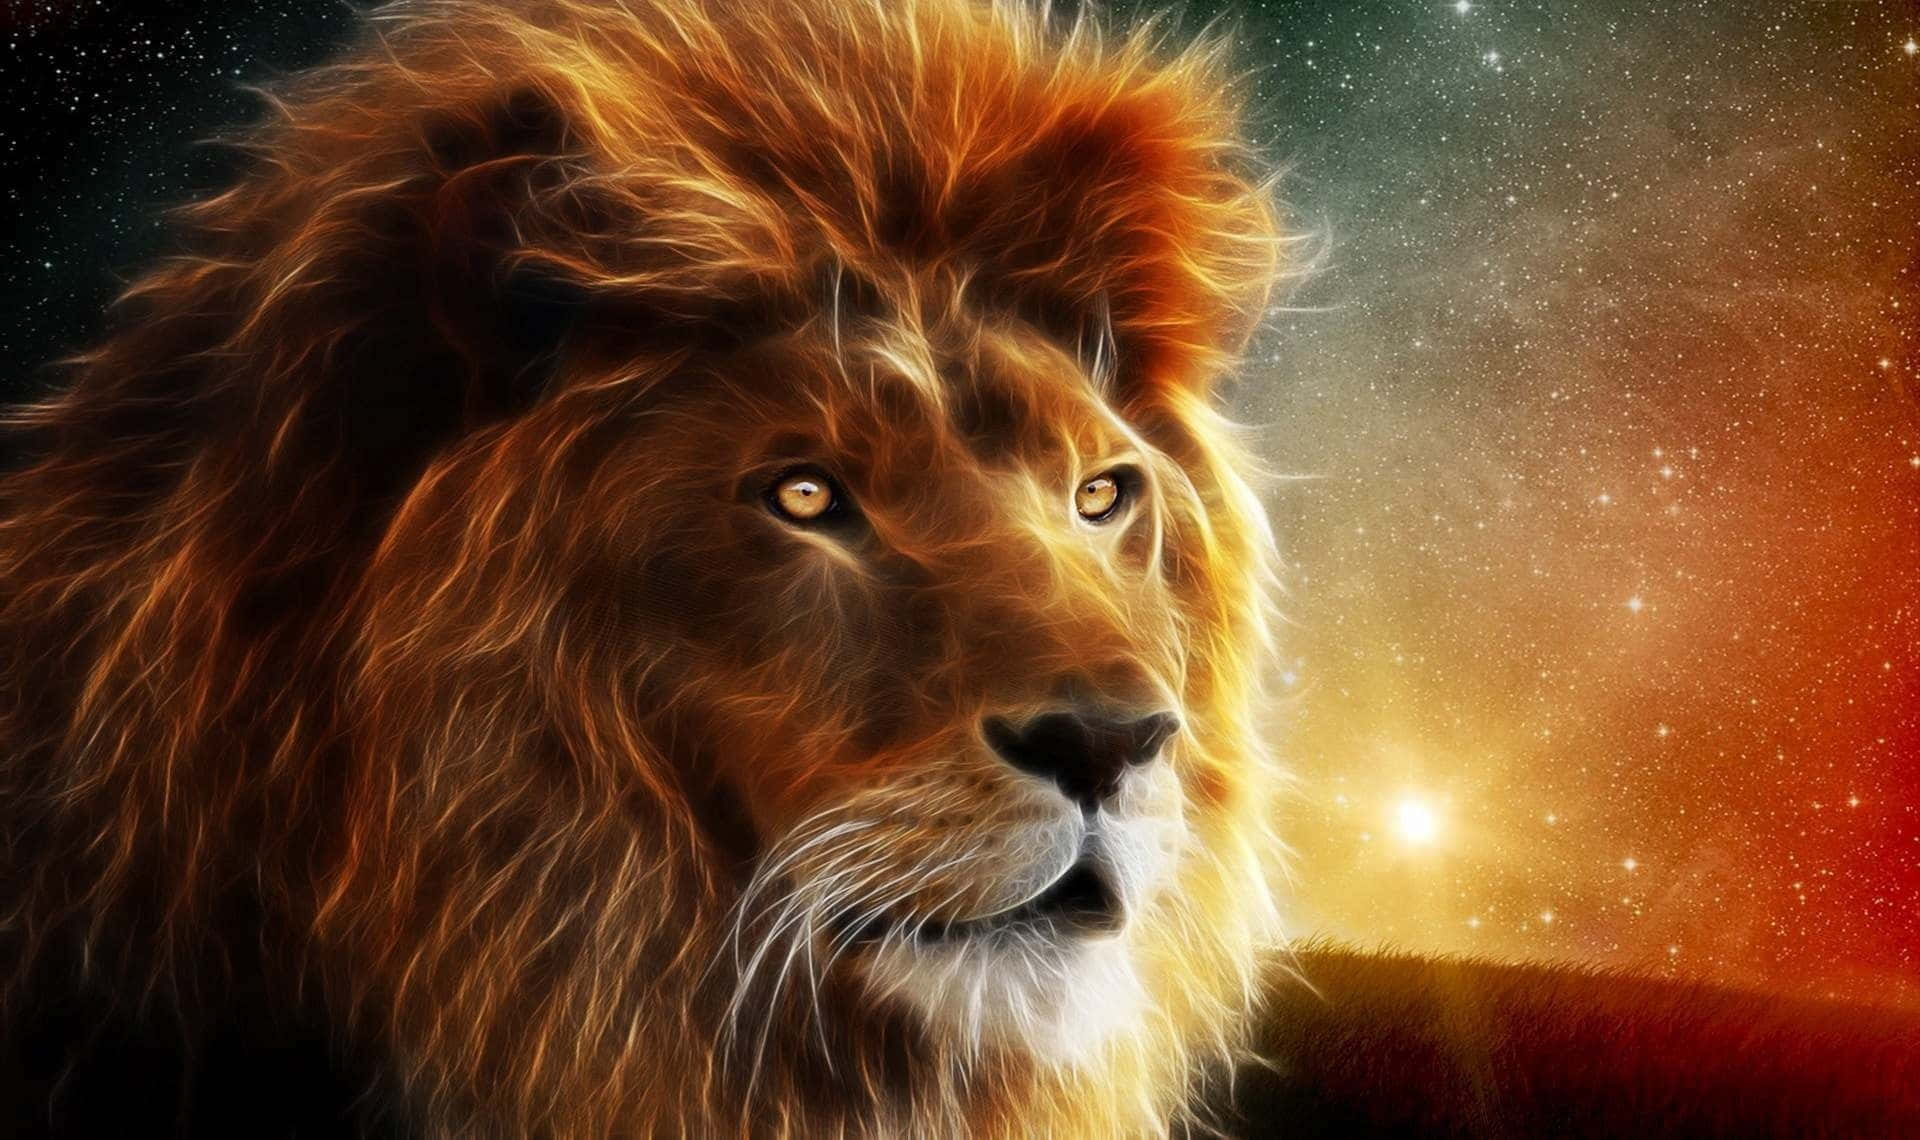 Roaring Lion of Judah